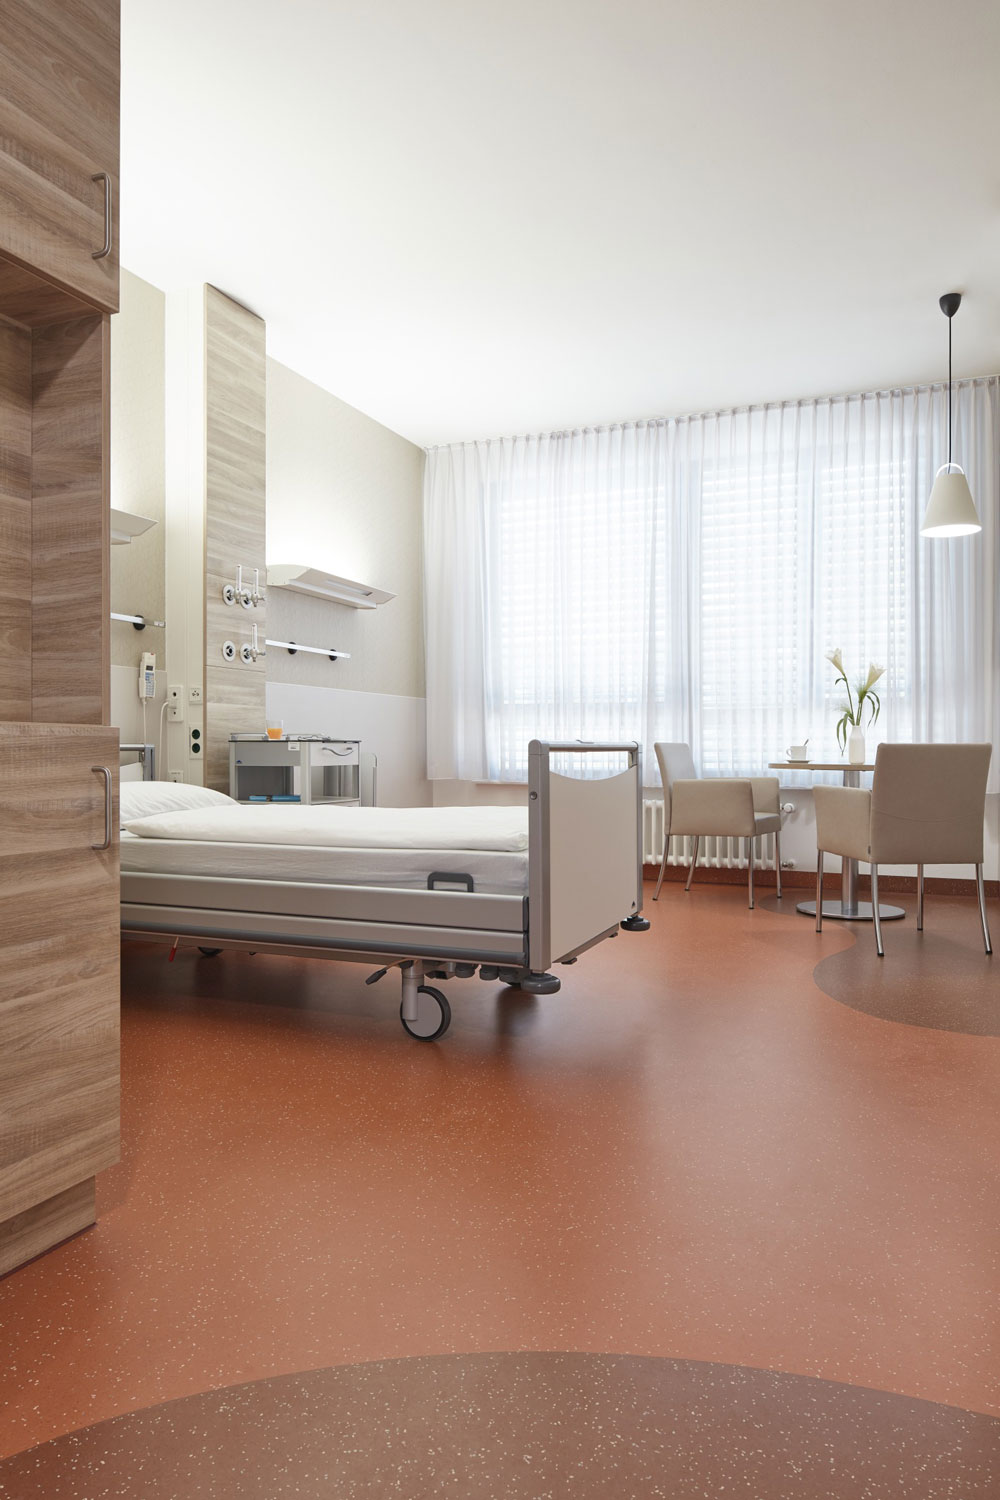 Healing Environment: Patientenzimmer in Klinik, Konzept: Sylvia Leydecker, Boden: noraplan signa